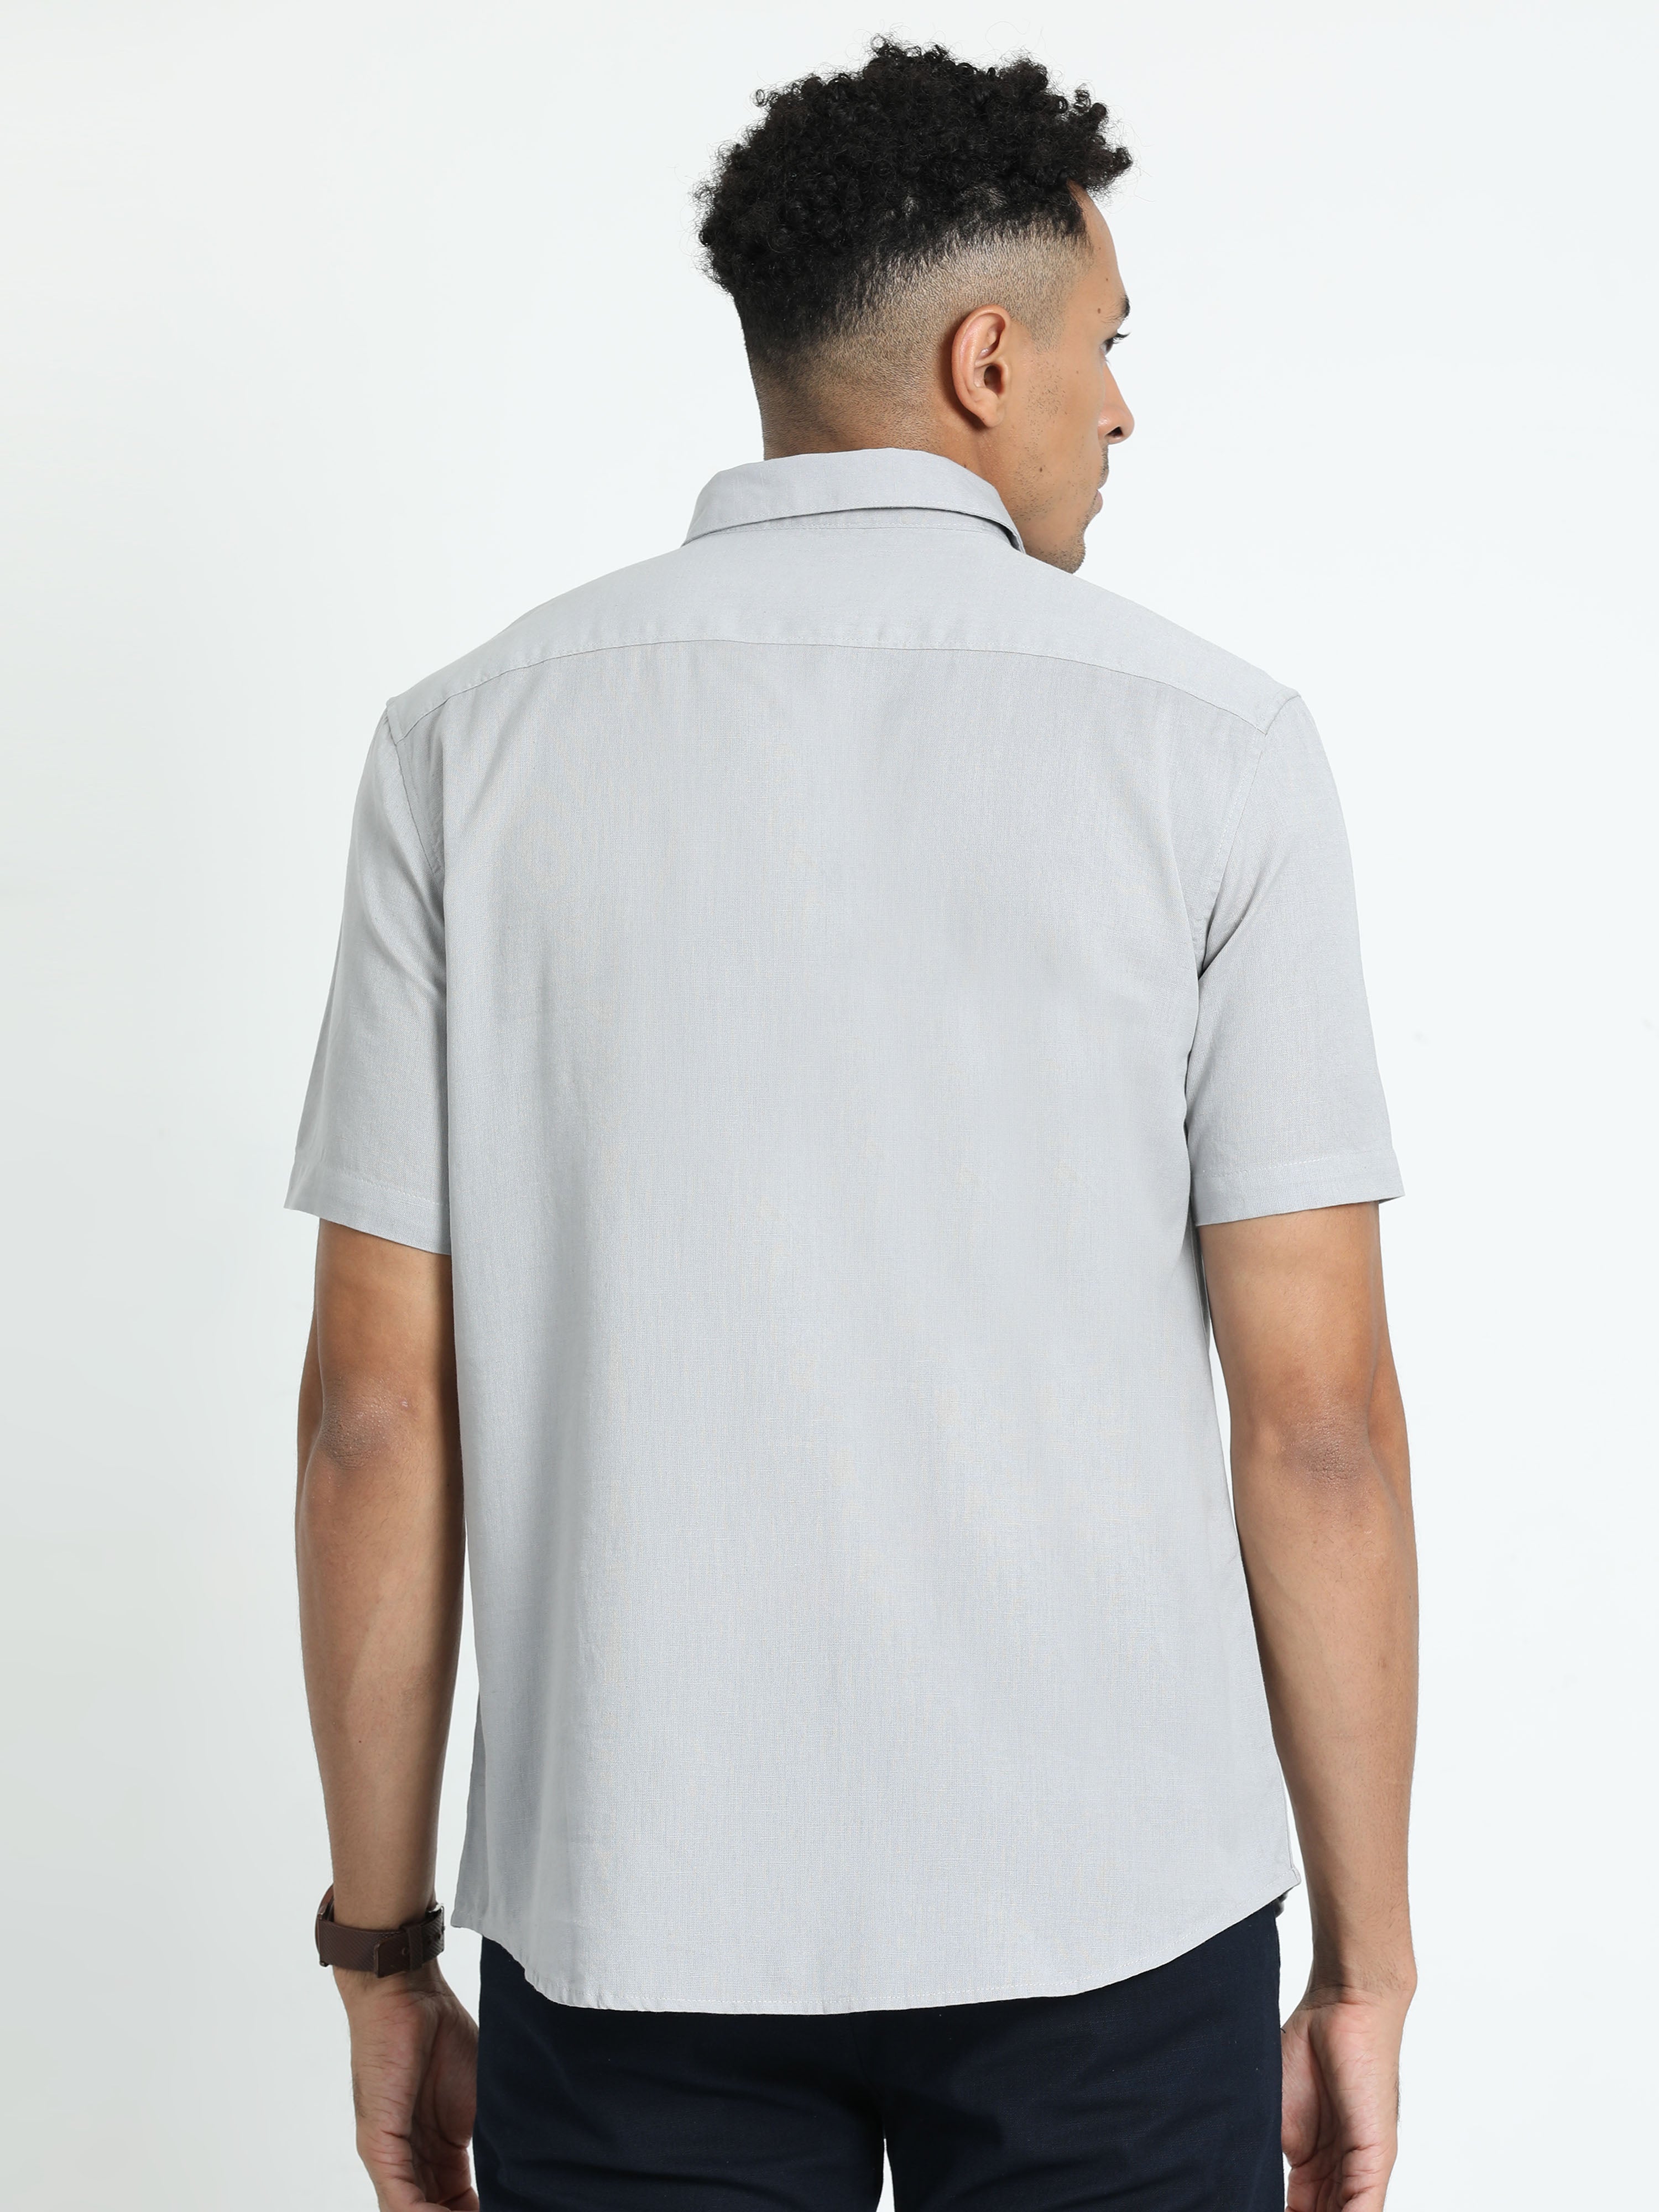 Classic Polo Men's Solid Grey Cotton Linen Half Sleeve Woven Shirt | DAMASK-GREY SF HS